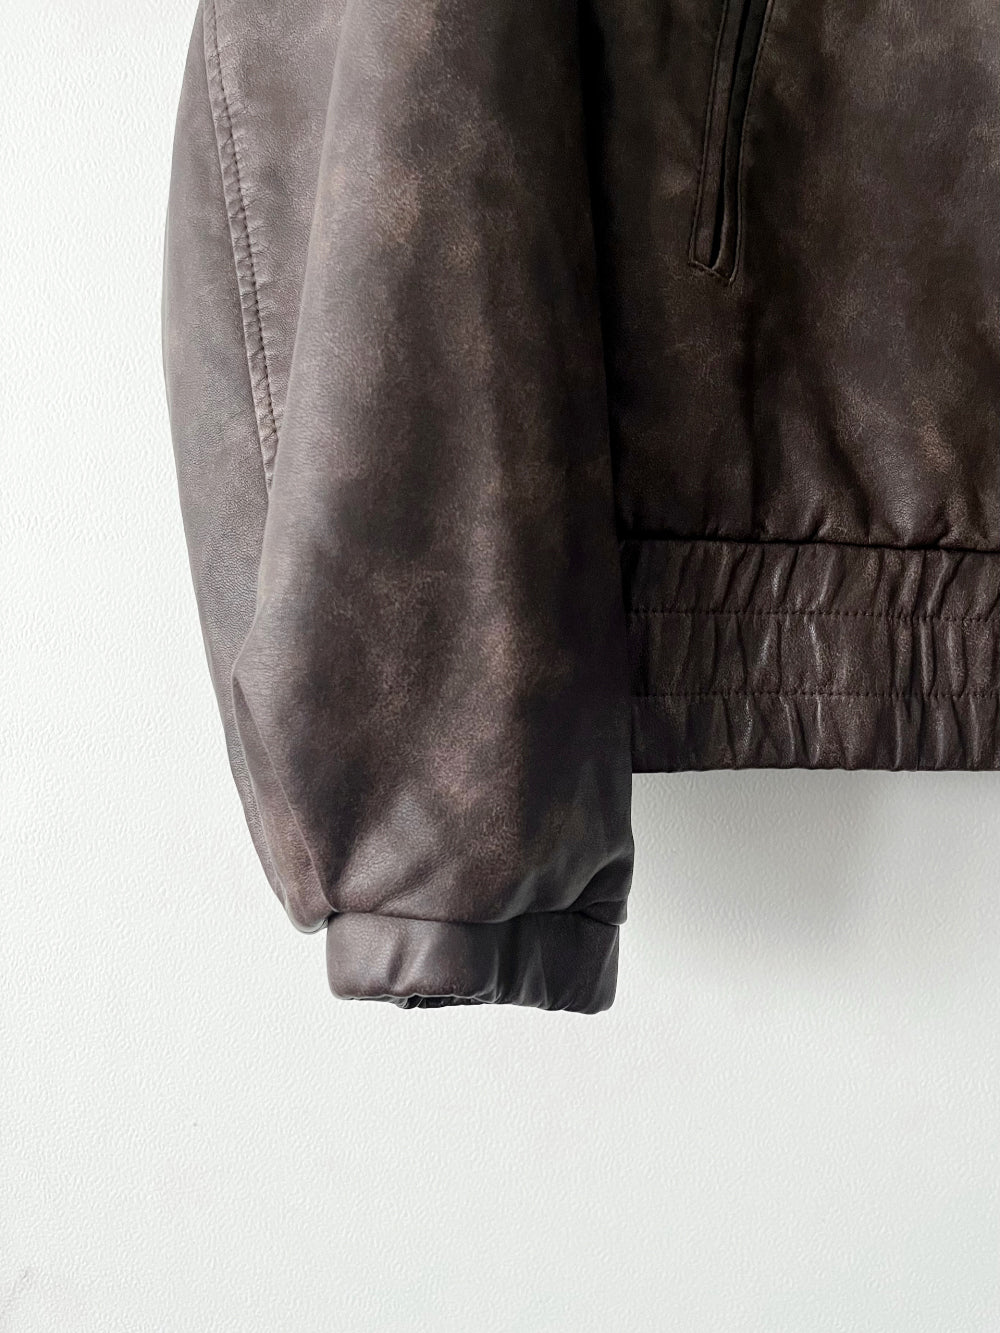 Averdeen leather jacket